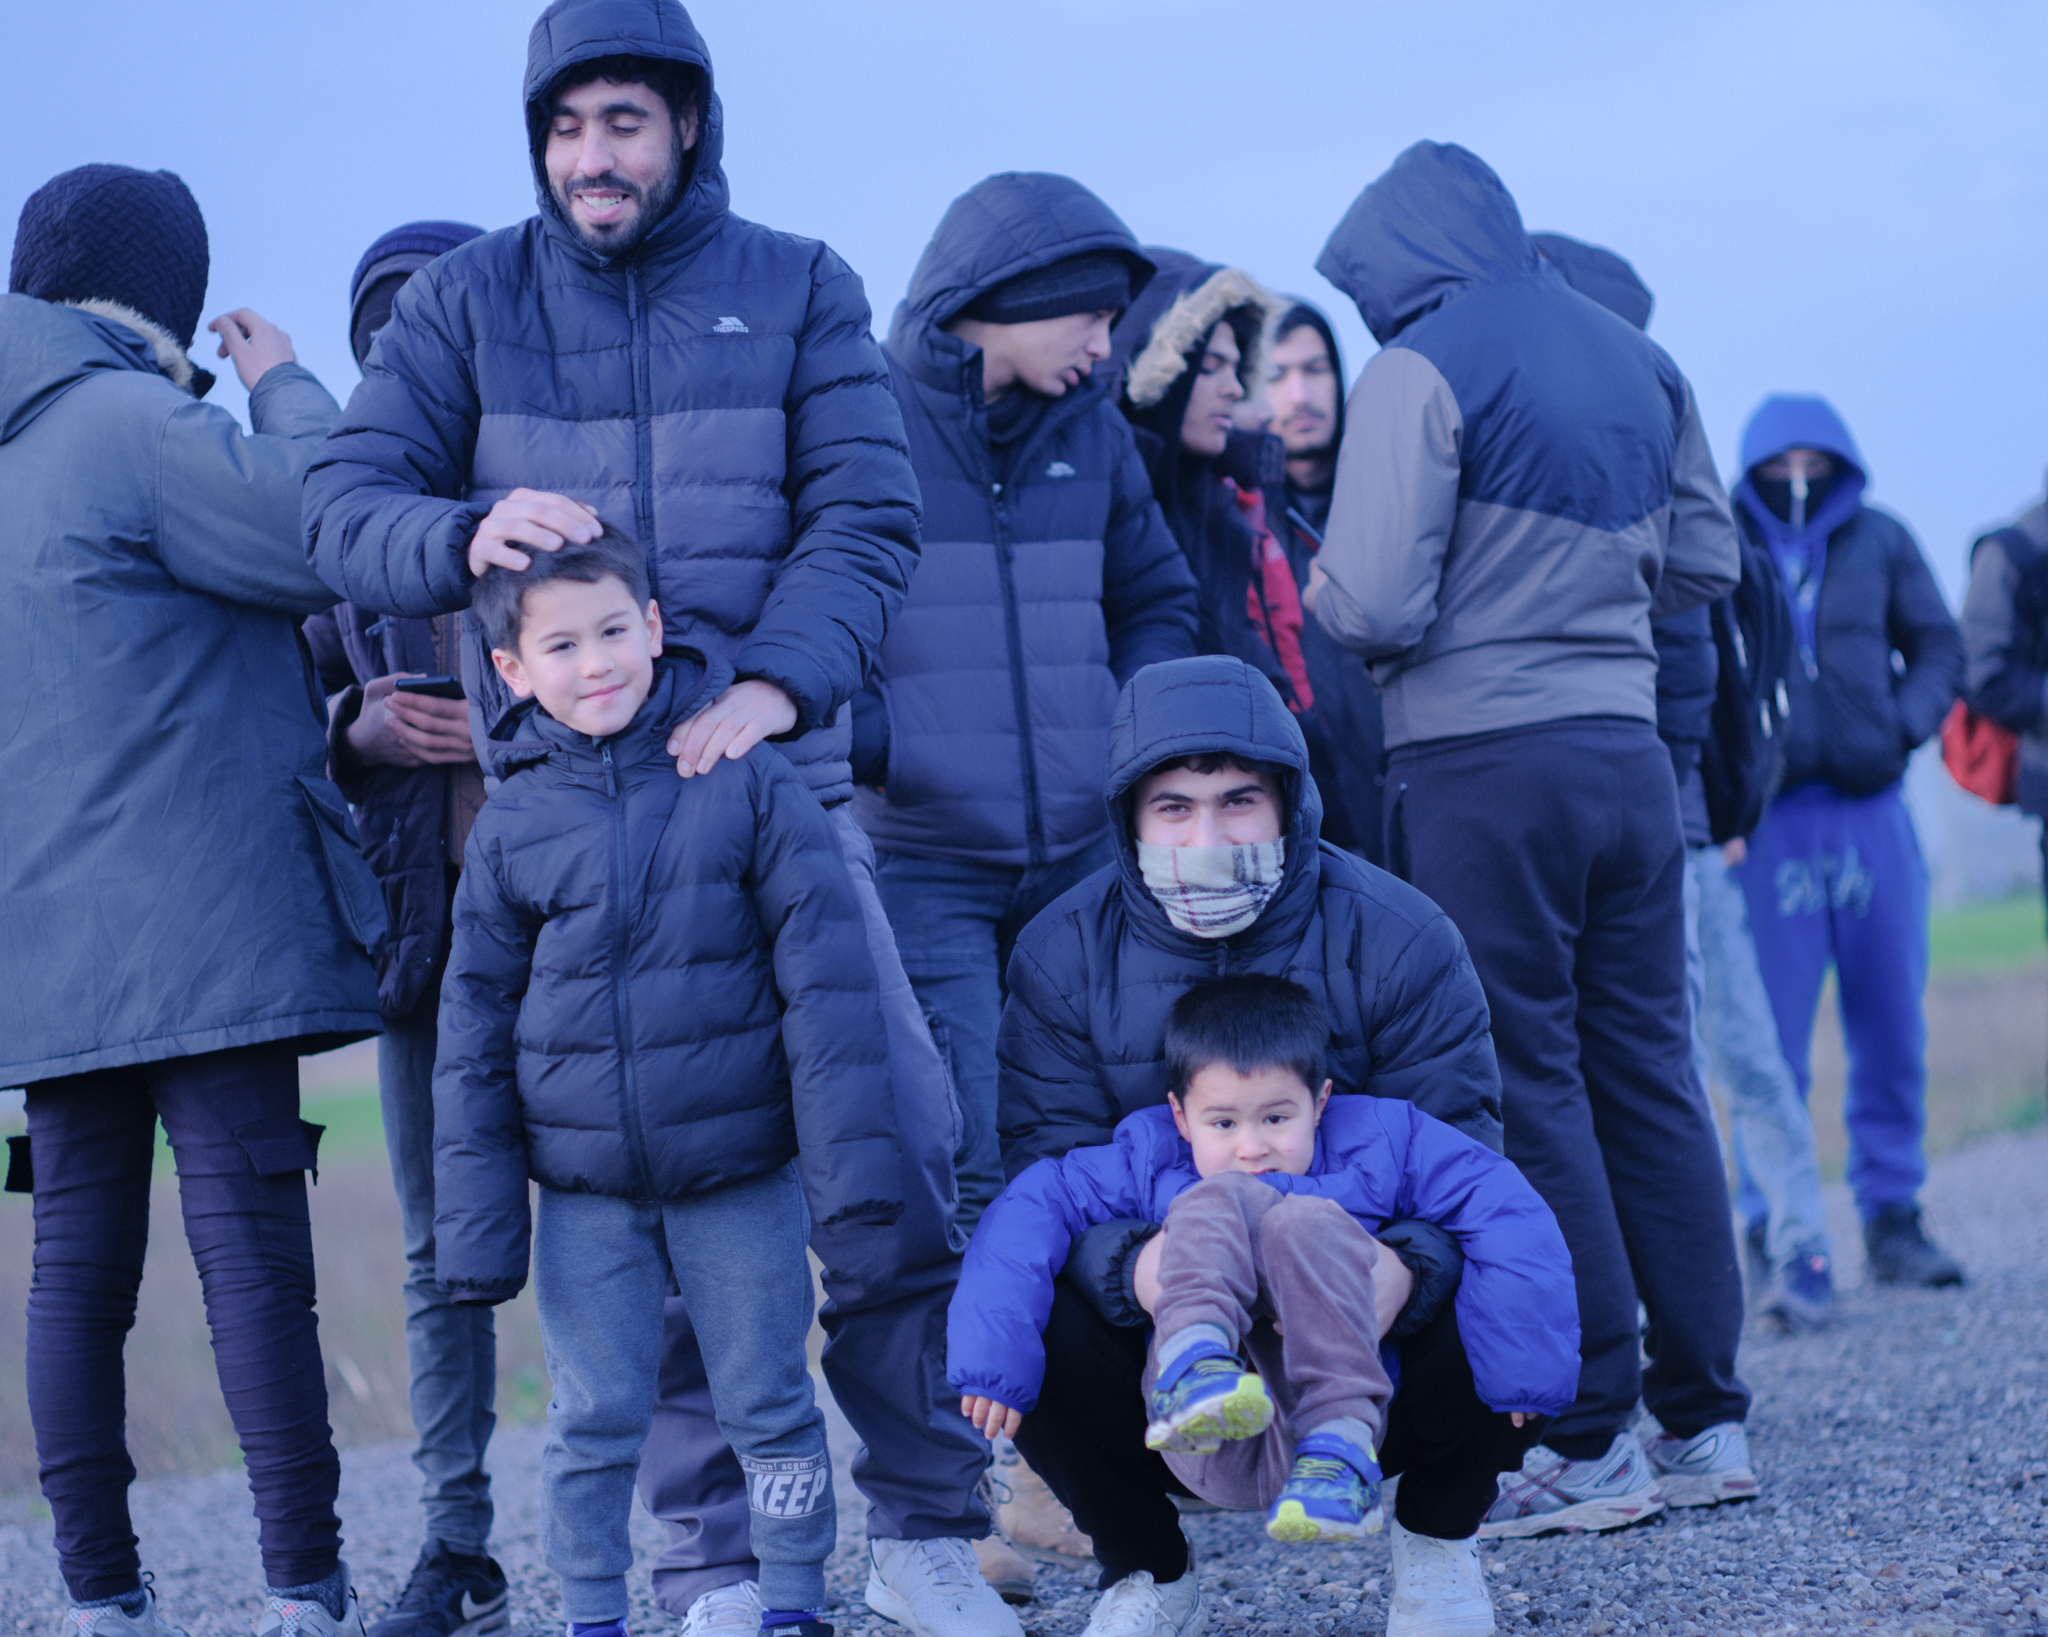 0SSA0138 シリア人移民との思い出【イギリス取材レポート-7】 シリア人移民との思い出【イギリス取材レポート-7】